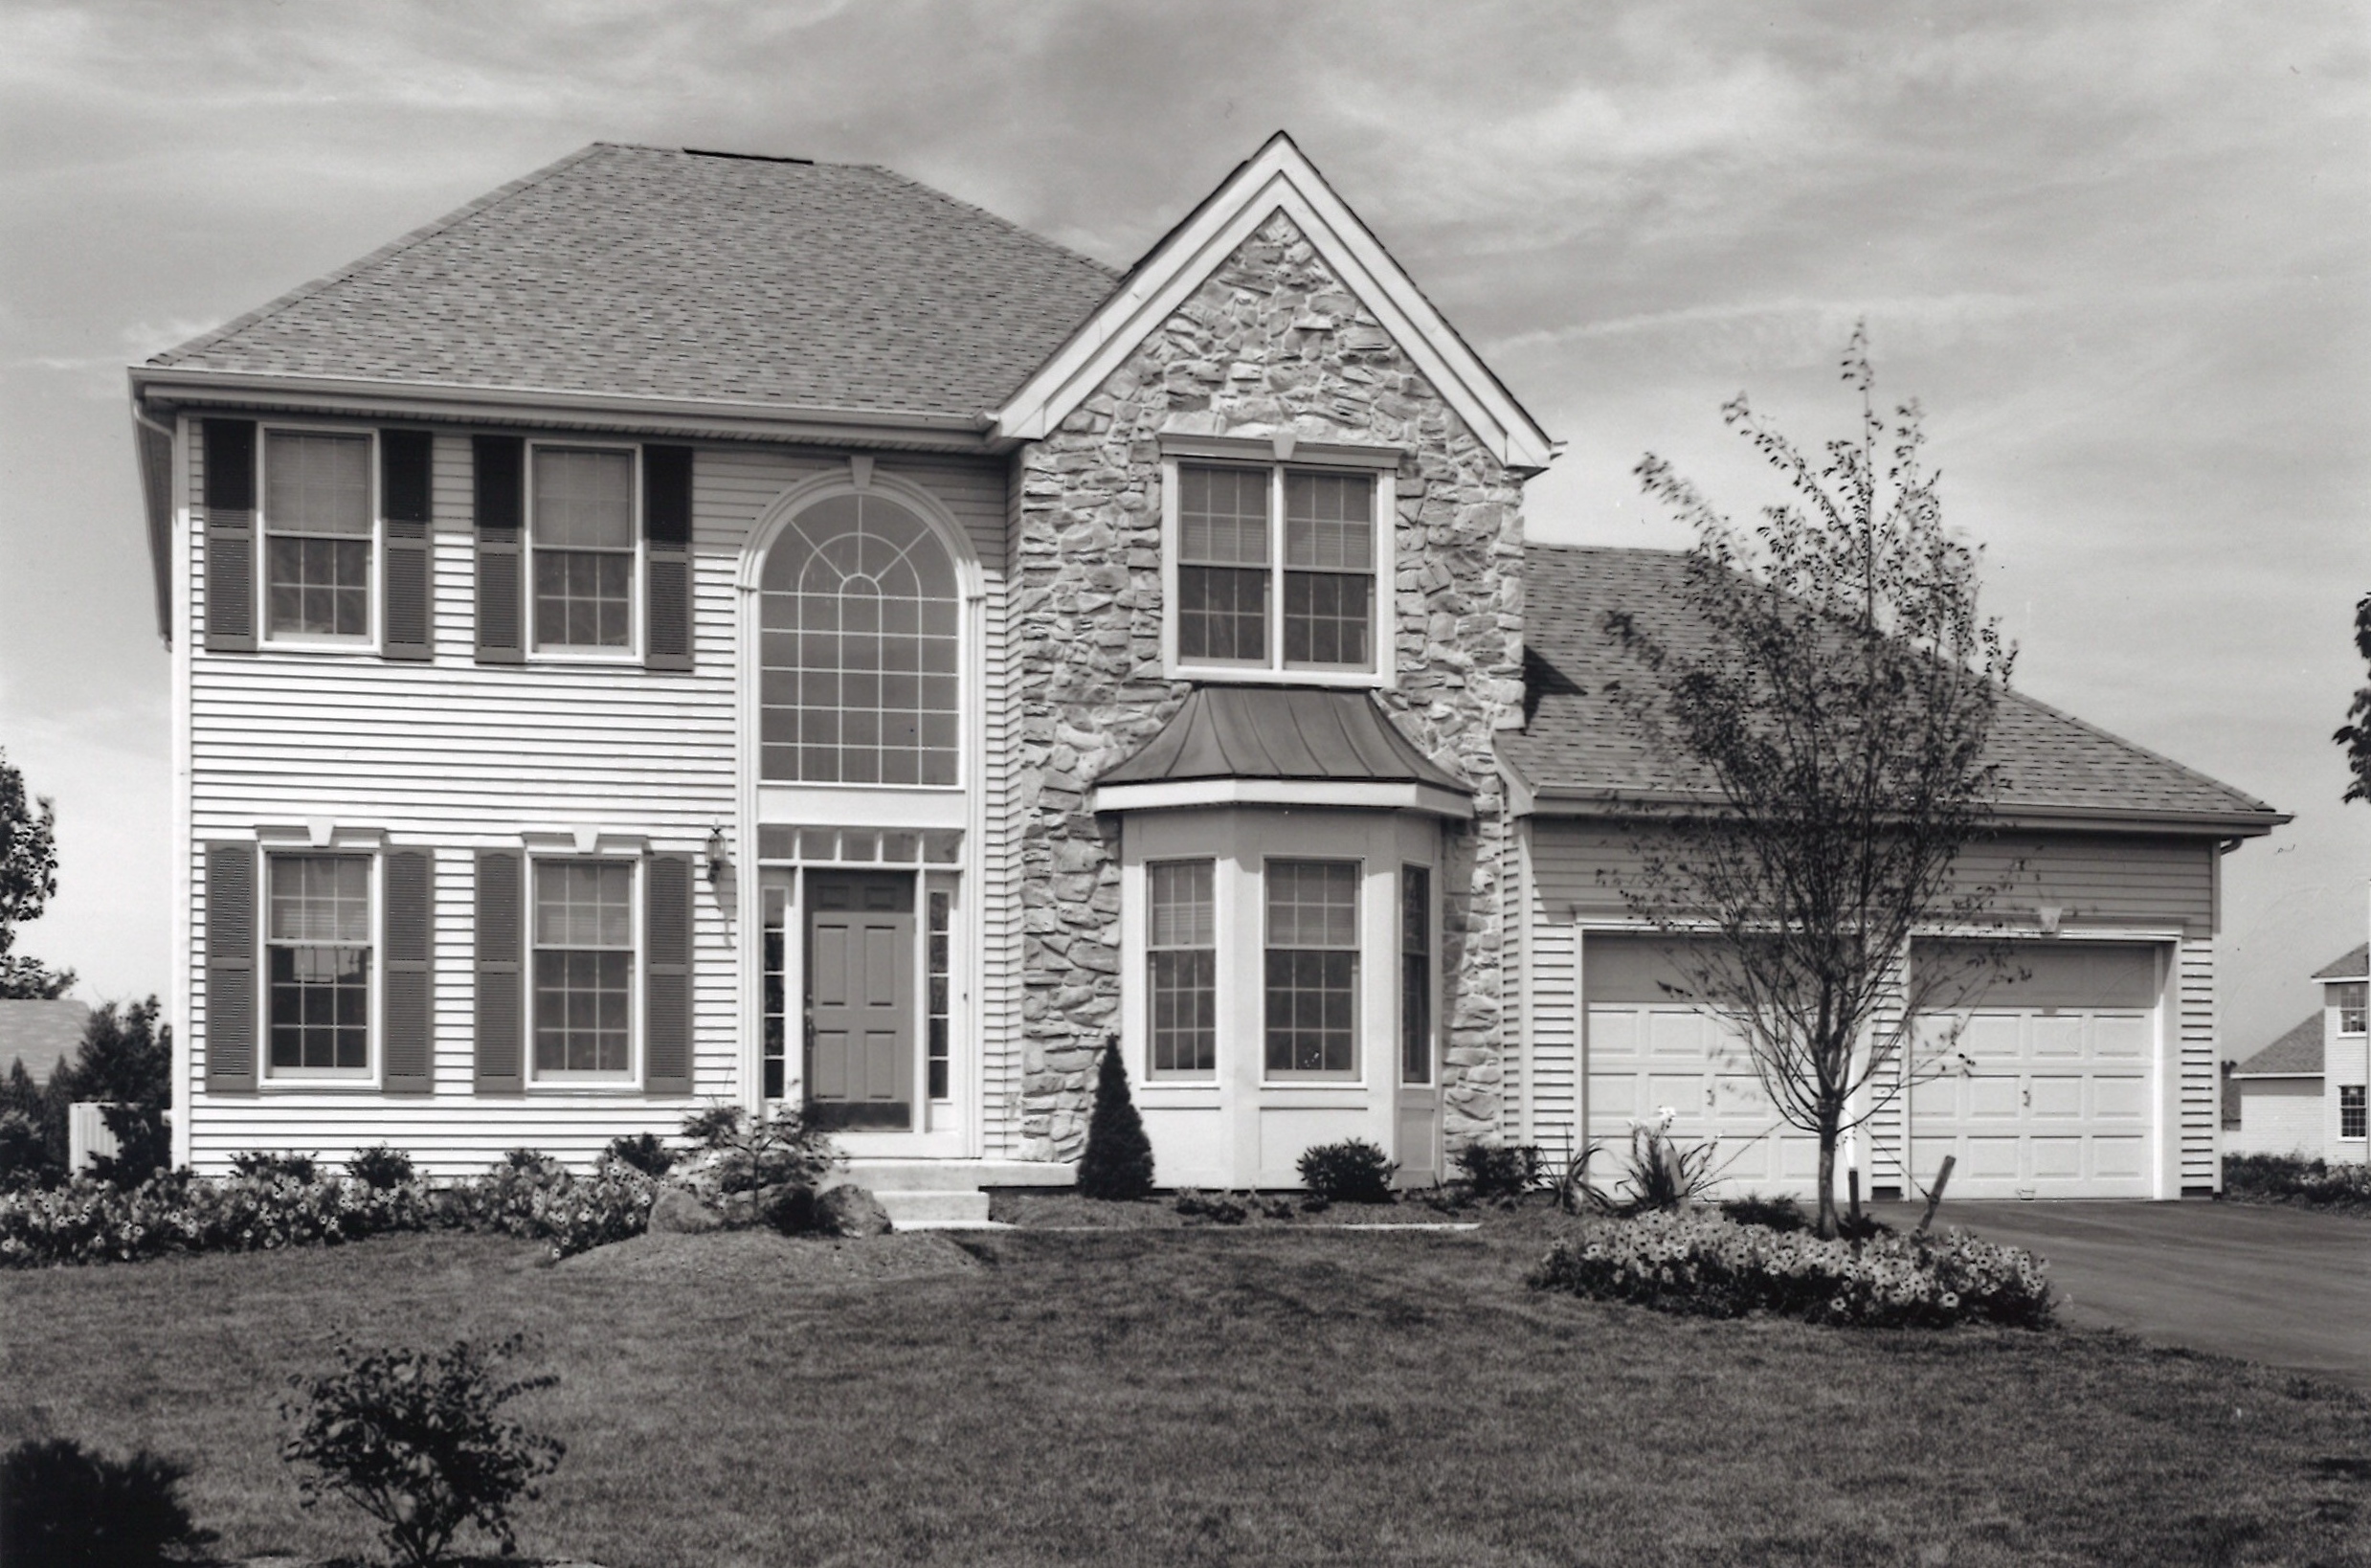 Single family homes in Plainsboro, NJ